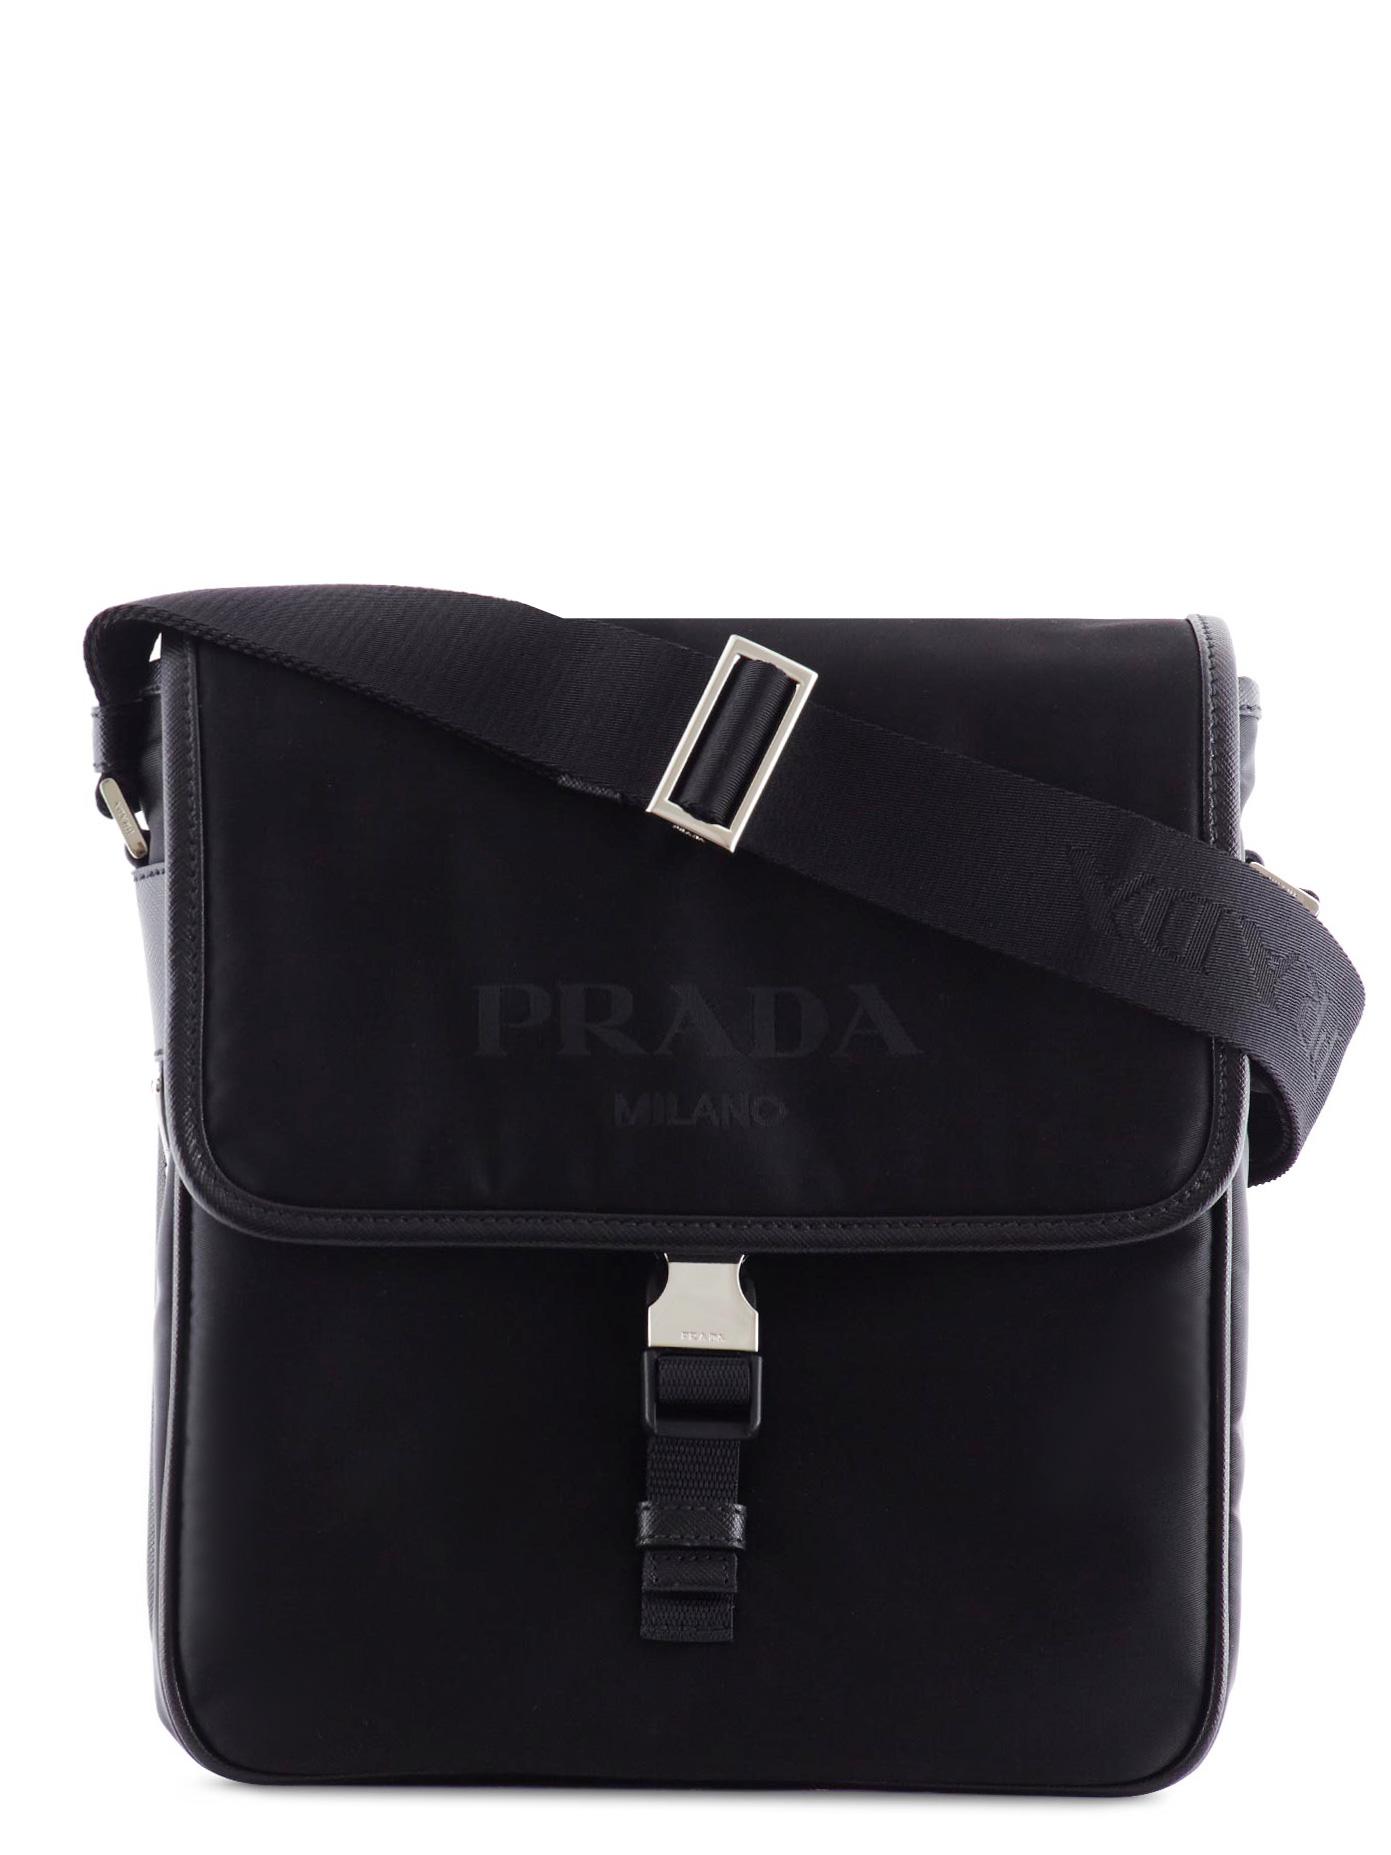 Prada Logo Nylon Crossbody Bag in Black for Men - Lyst